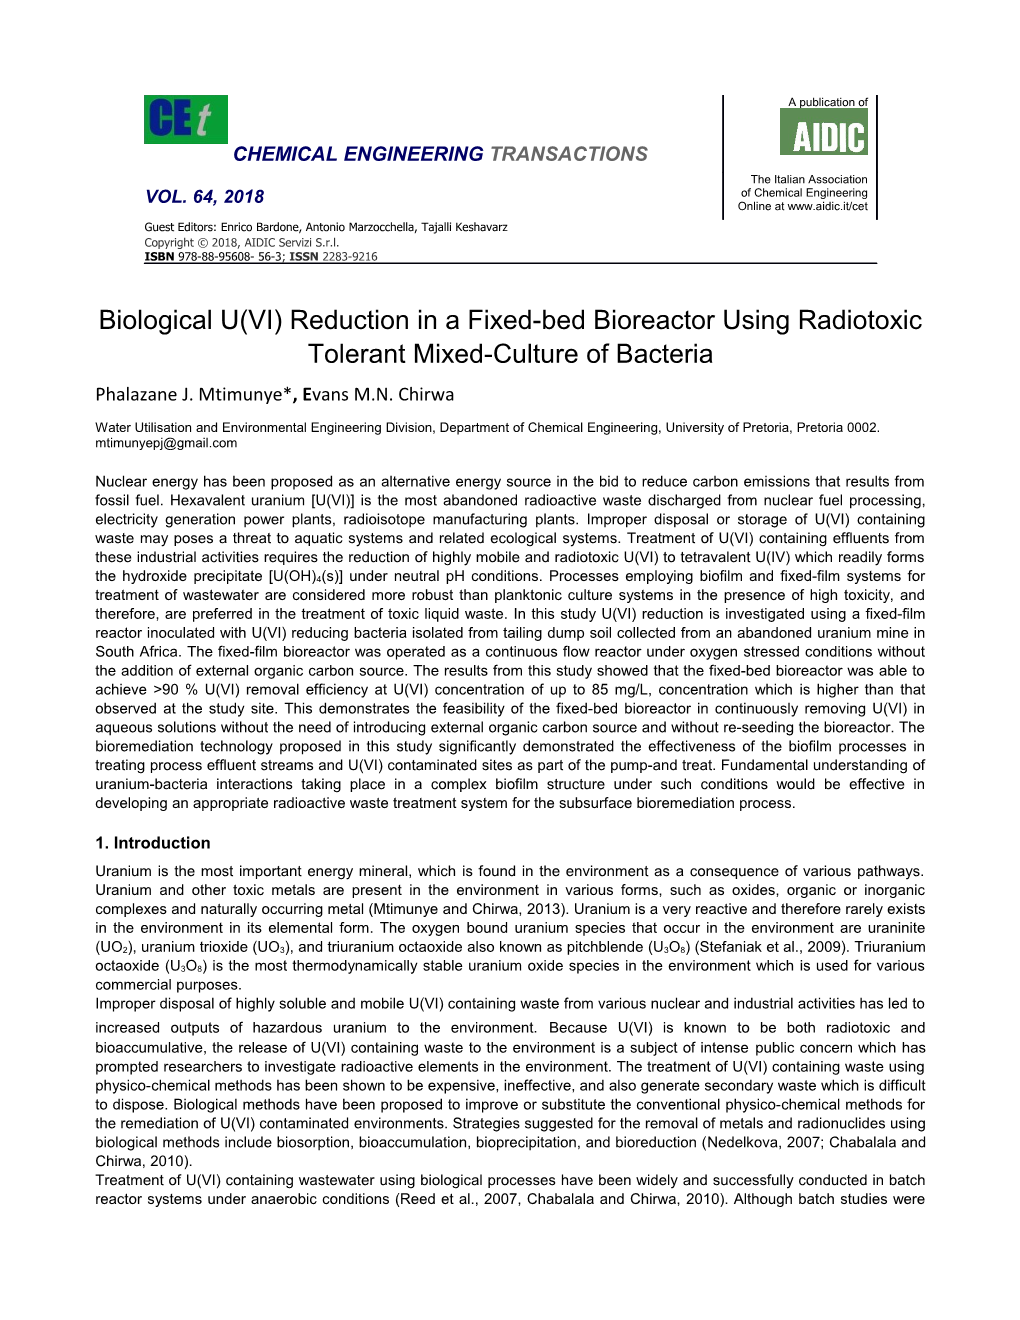 Biological U(VI) Reduction in a Fixed-Bed Bioreactor Using Radiotoxic Tolerant Mixed-Culture